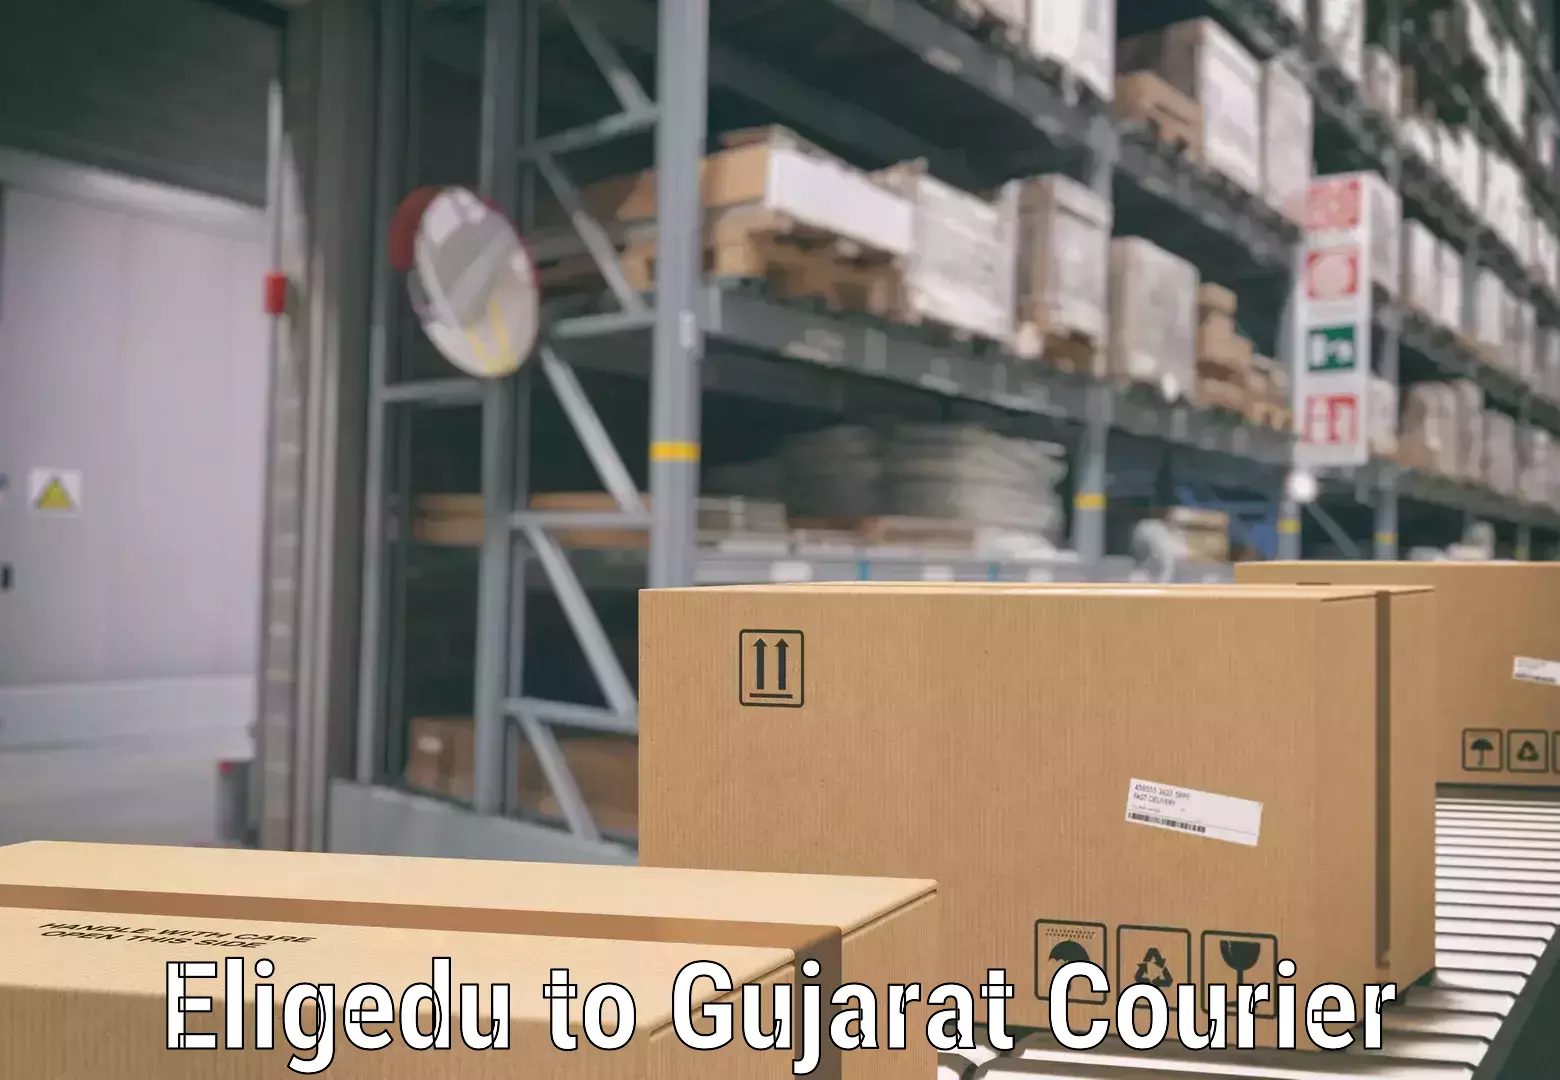 Excess baggage transport in Eligedu to Gujarat